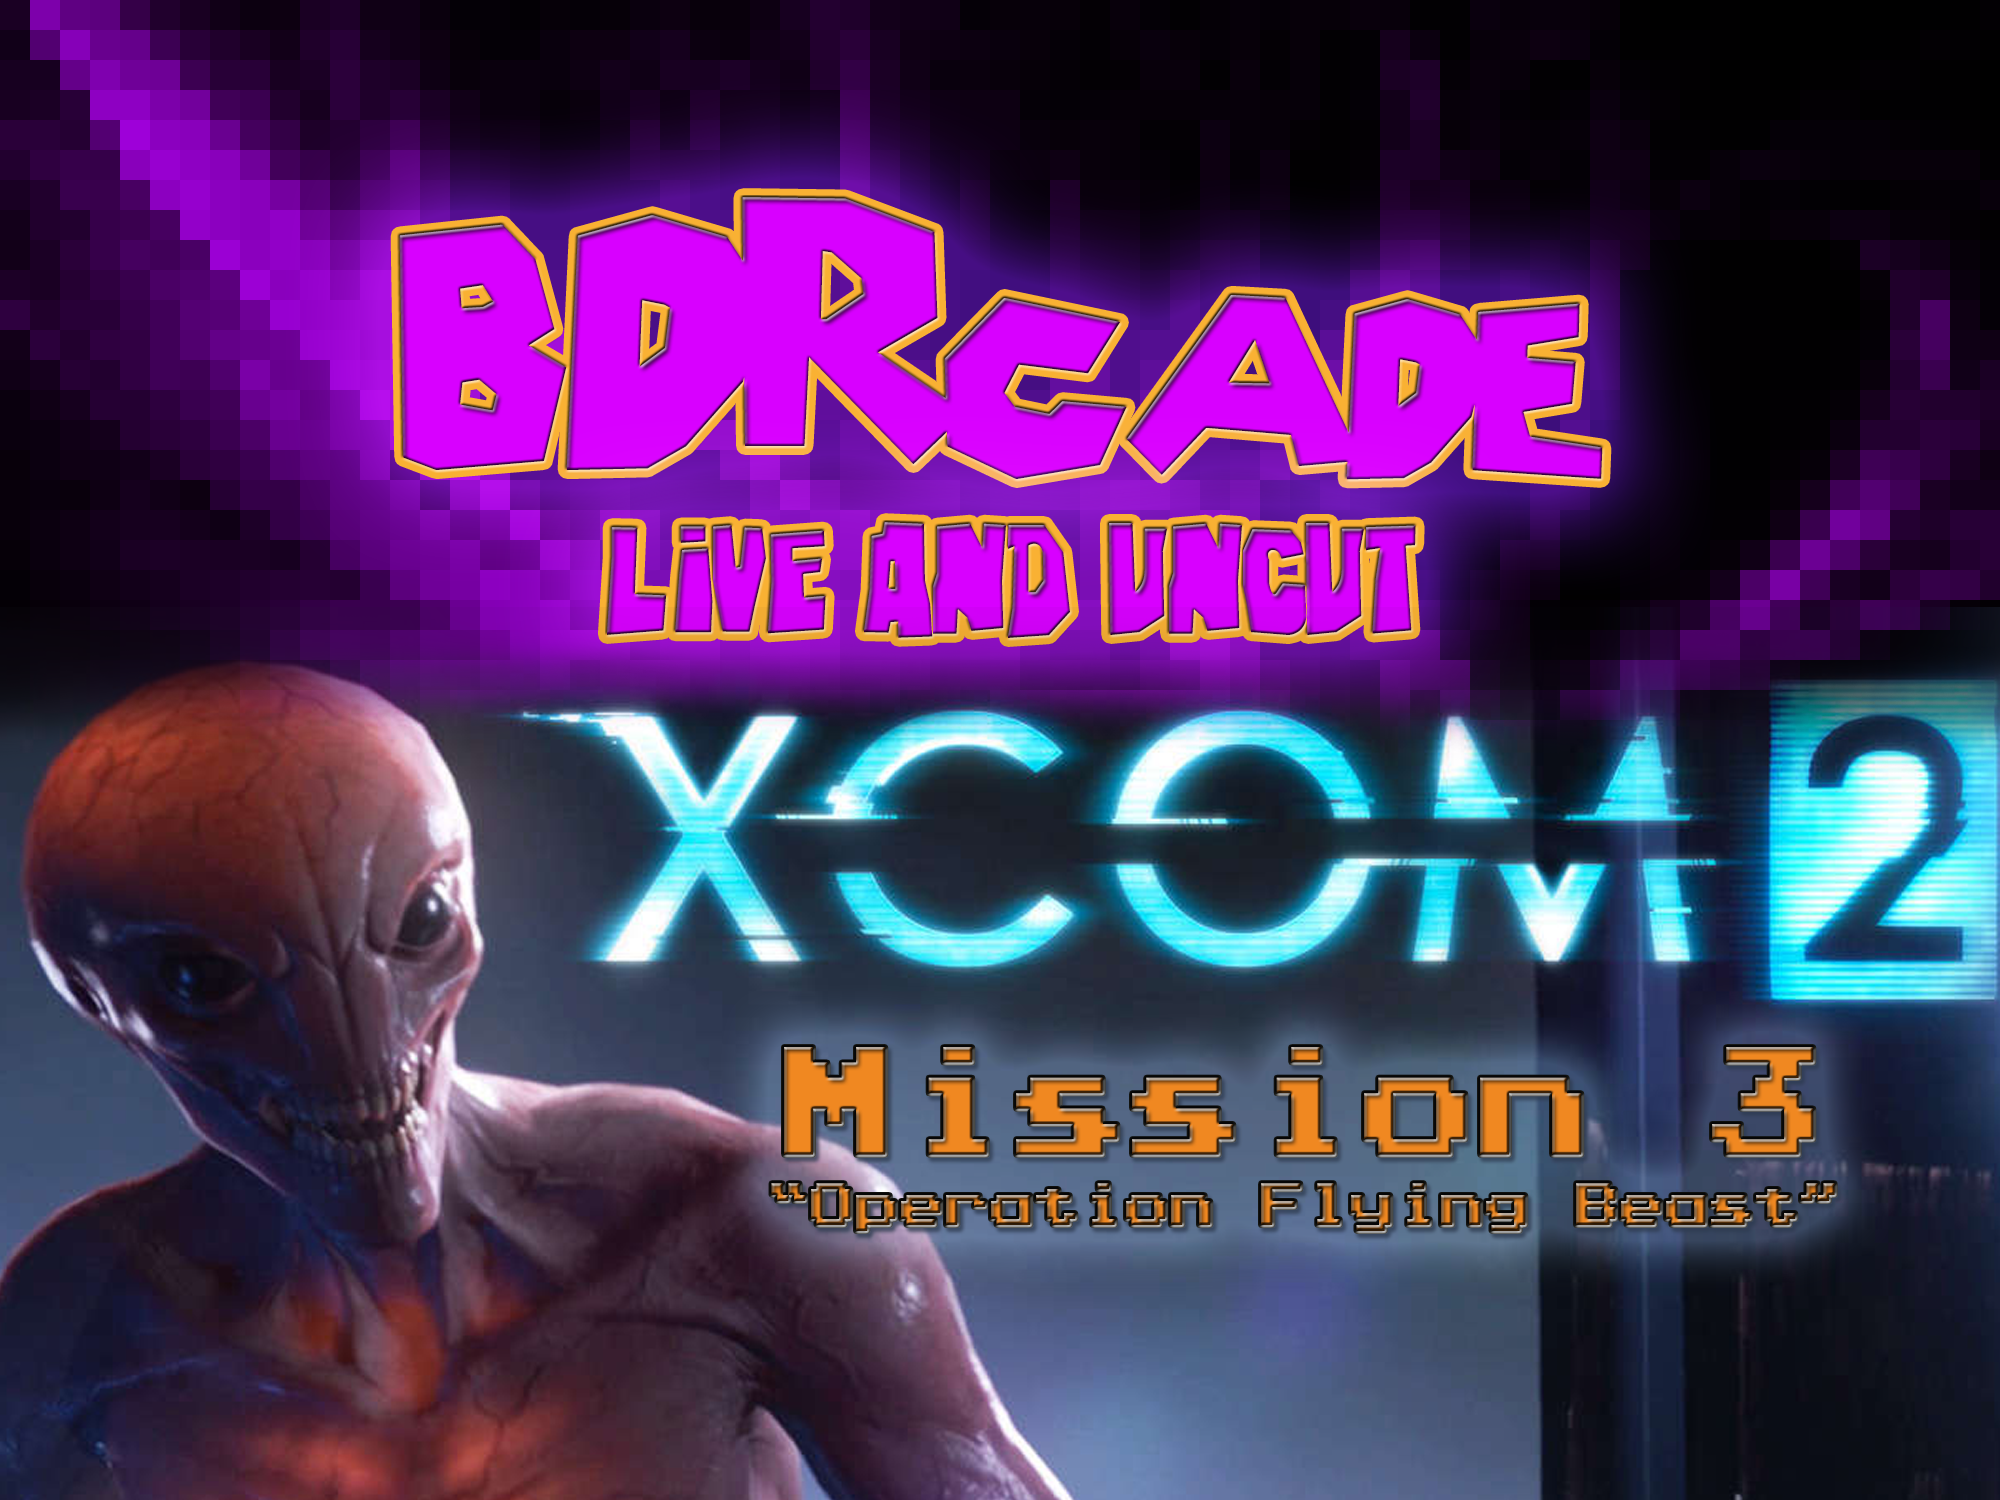 XCOM 2 – Mission 3: “Operation Flying Beast”- A BDRcade Live Stream